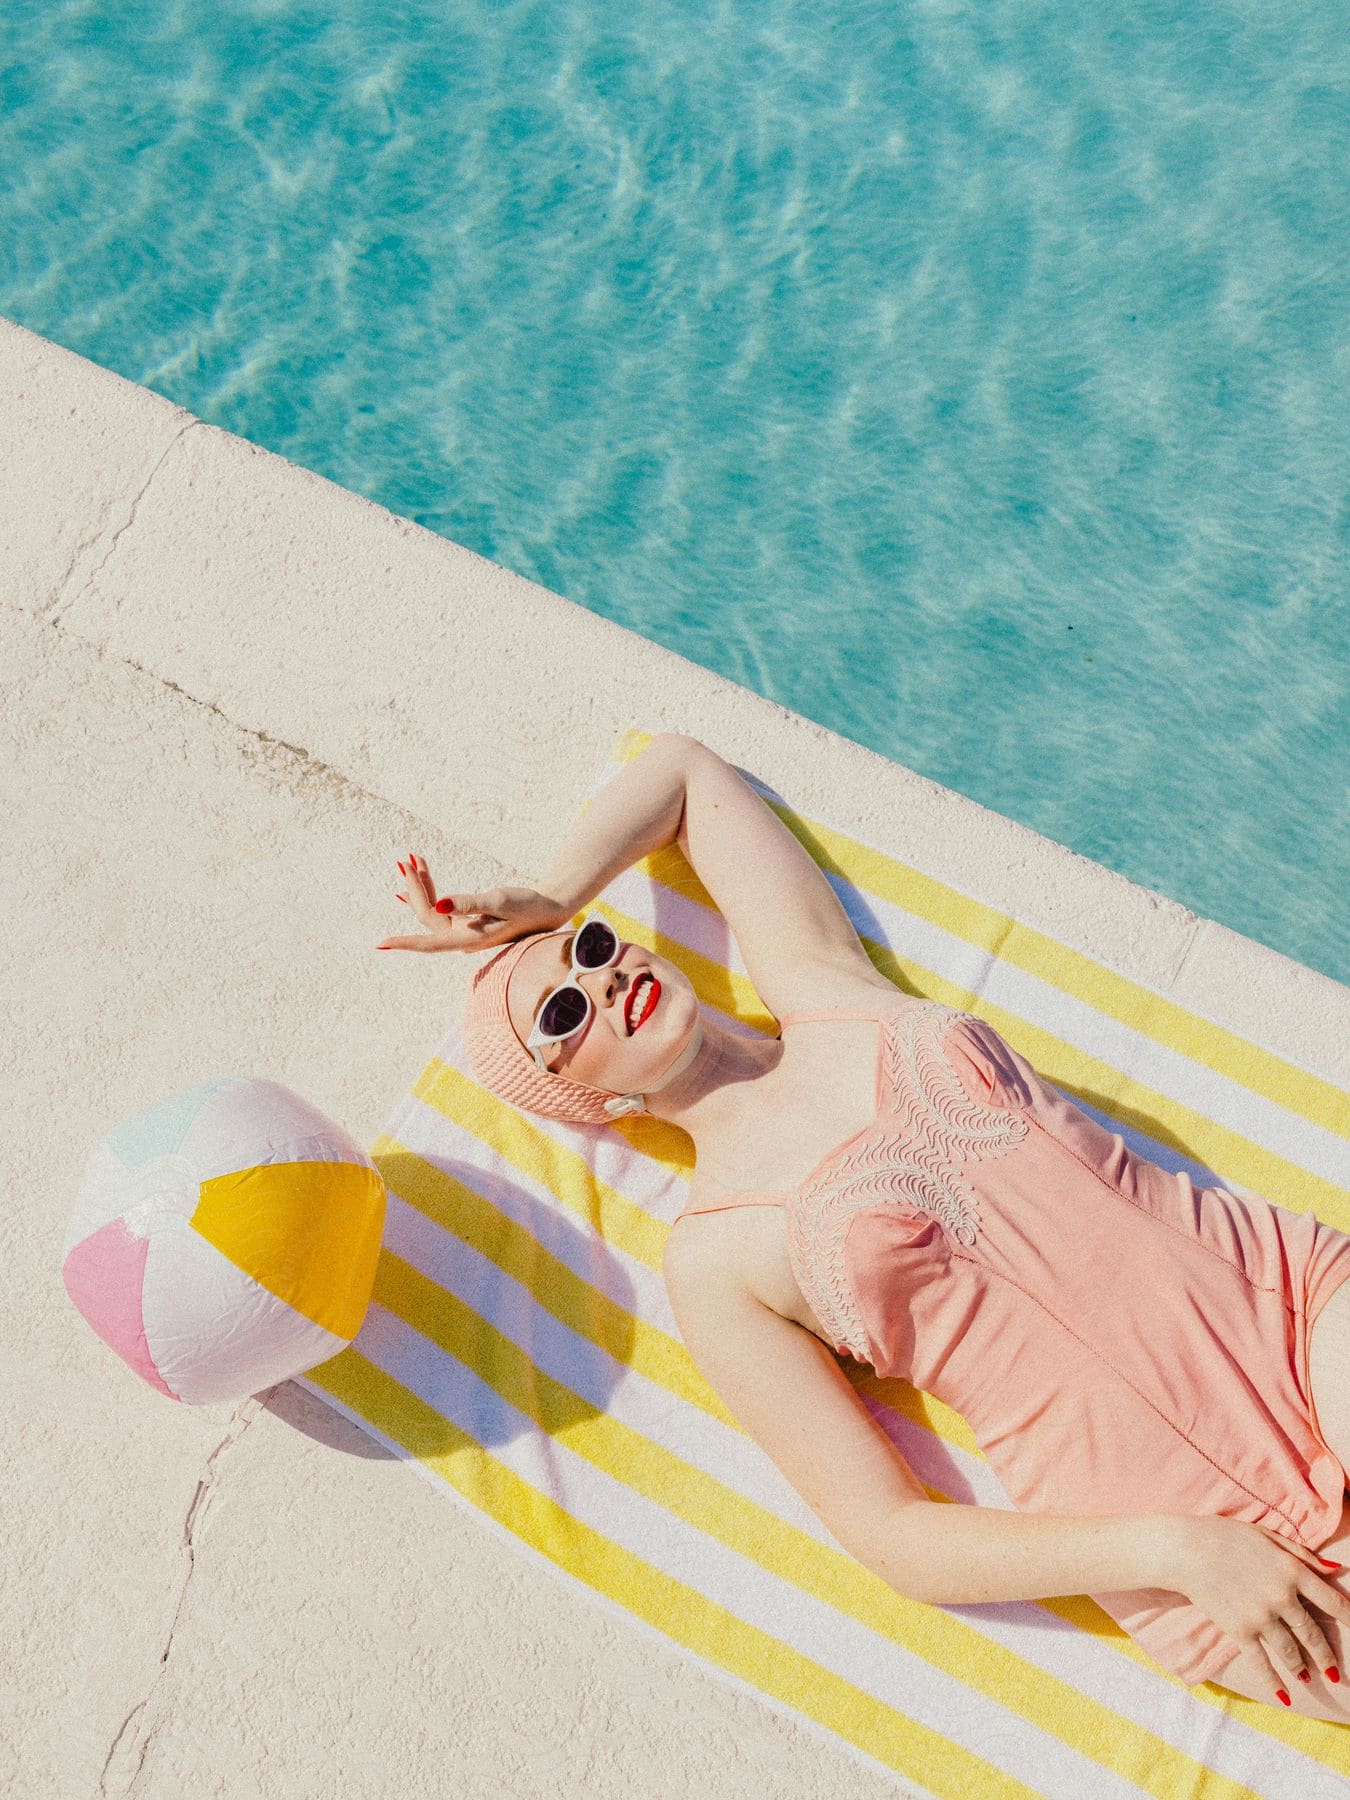 Woman lying on a towel sunbathing next to a pool.